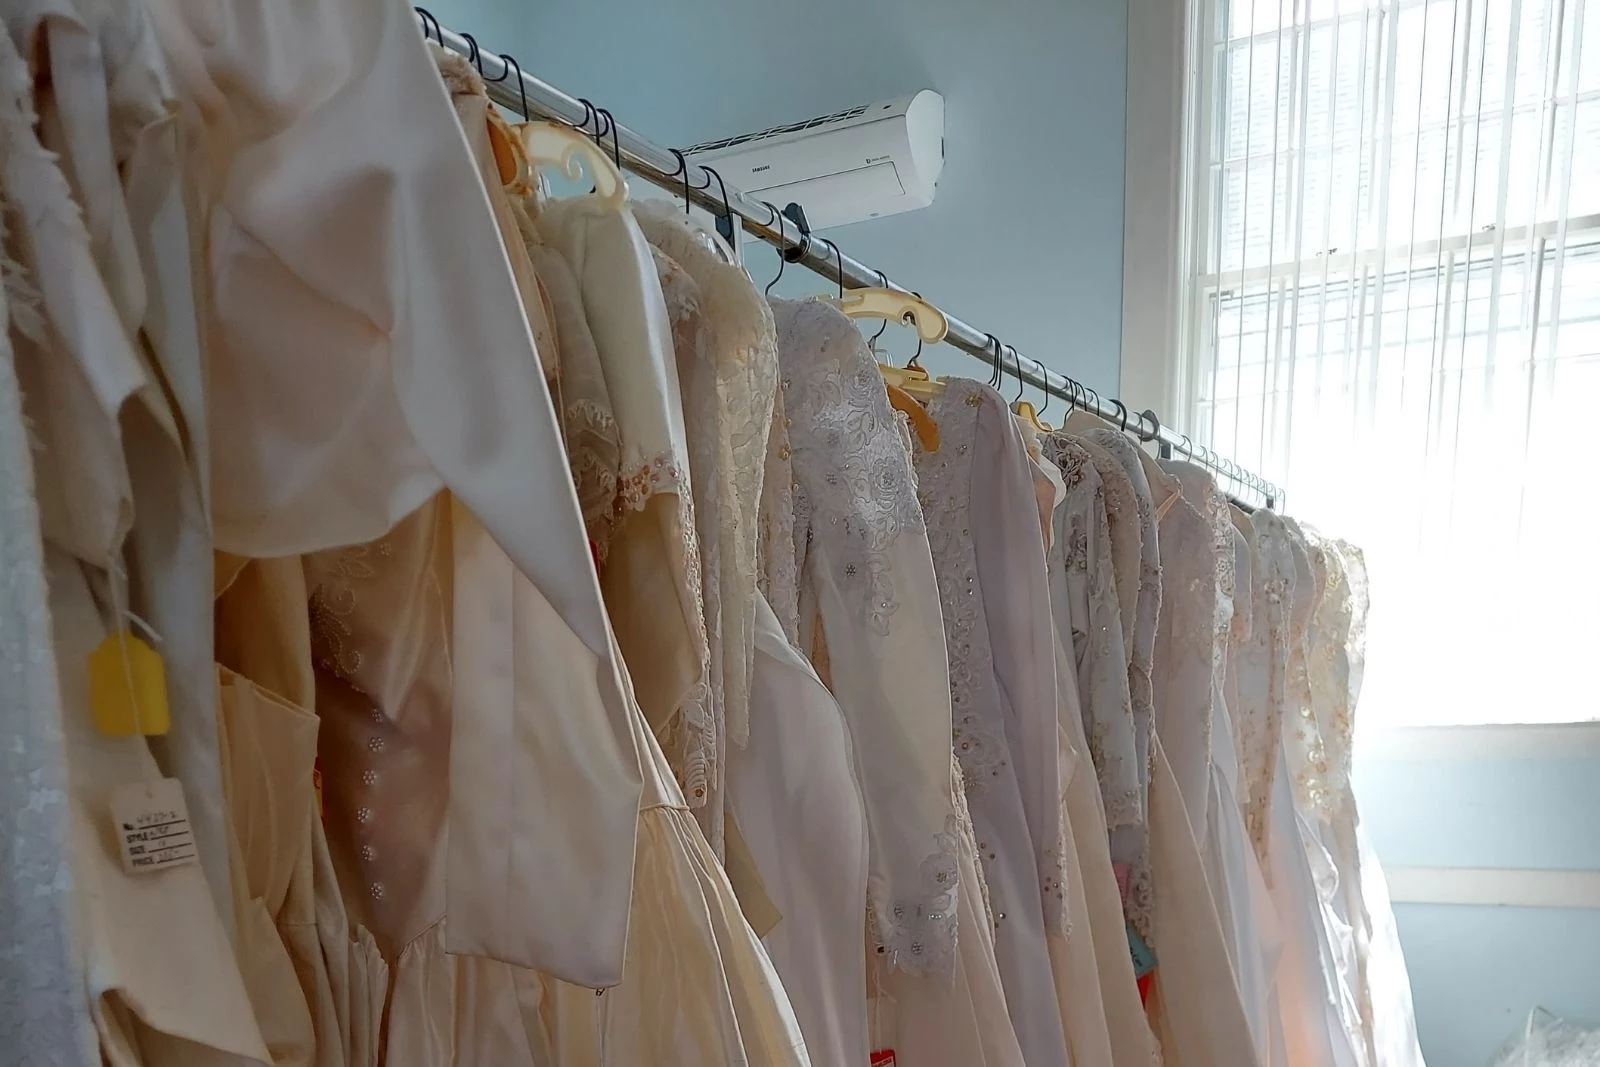 Bridgewater Miss Louise Prom Closet: Dresses rented at discount prices